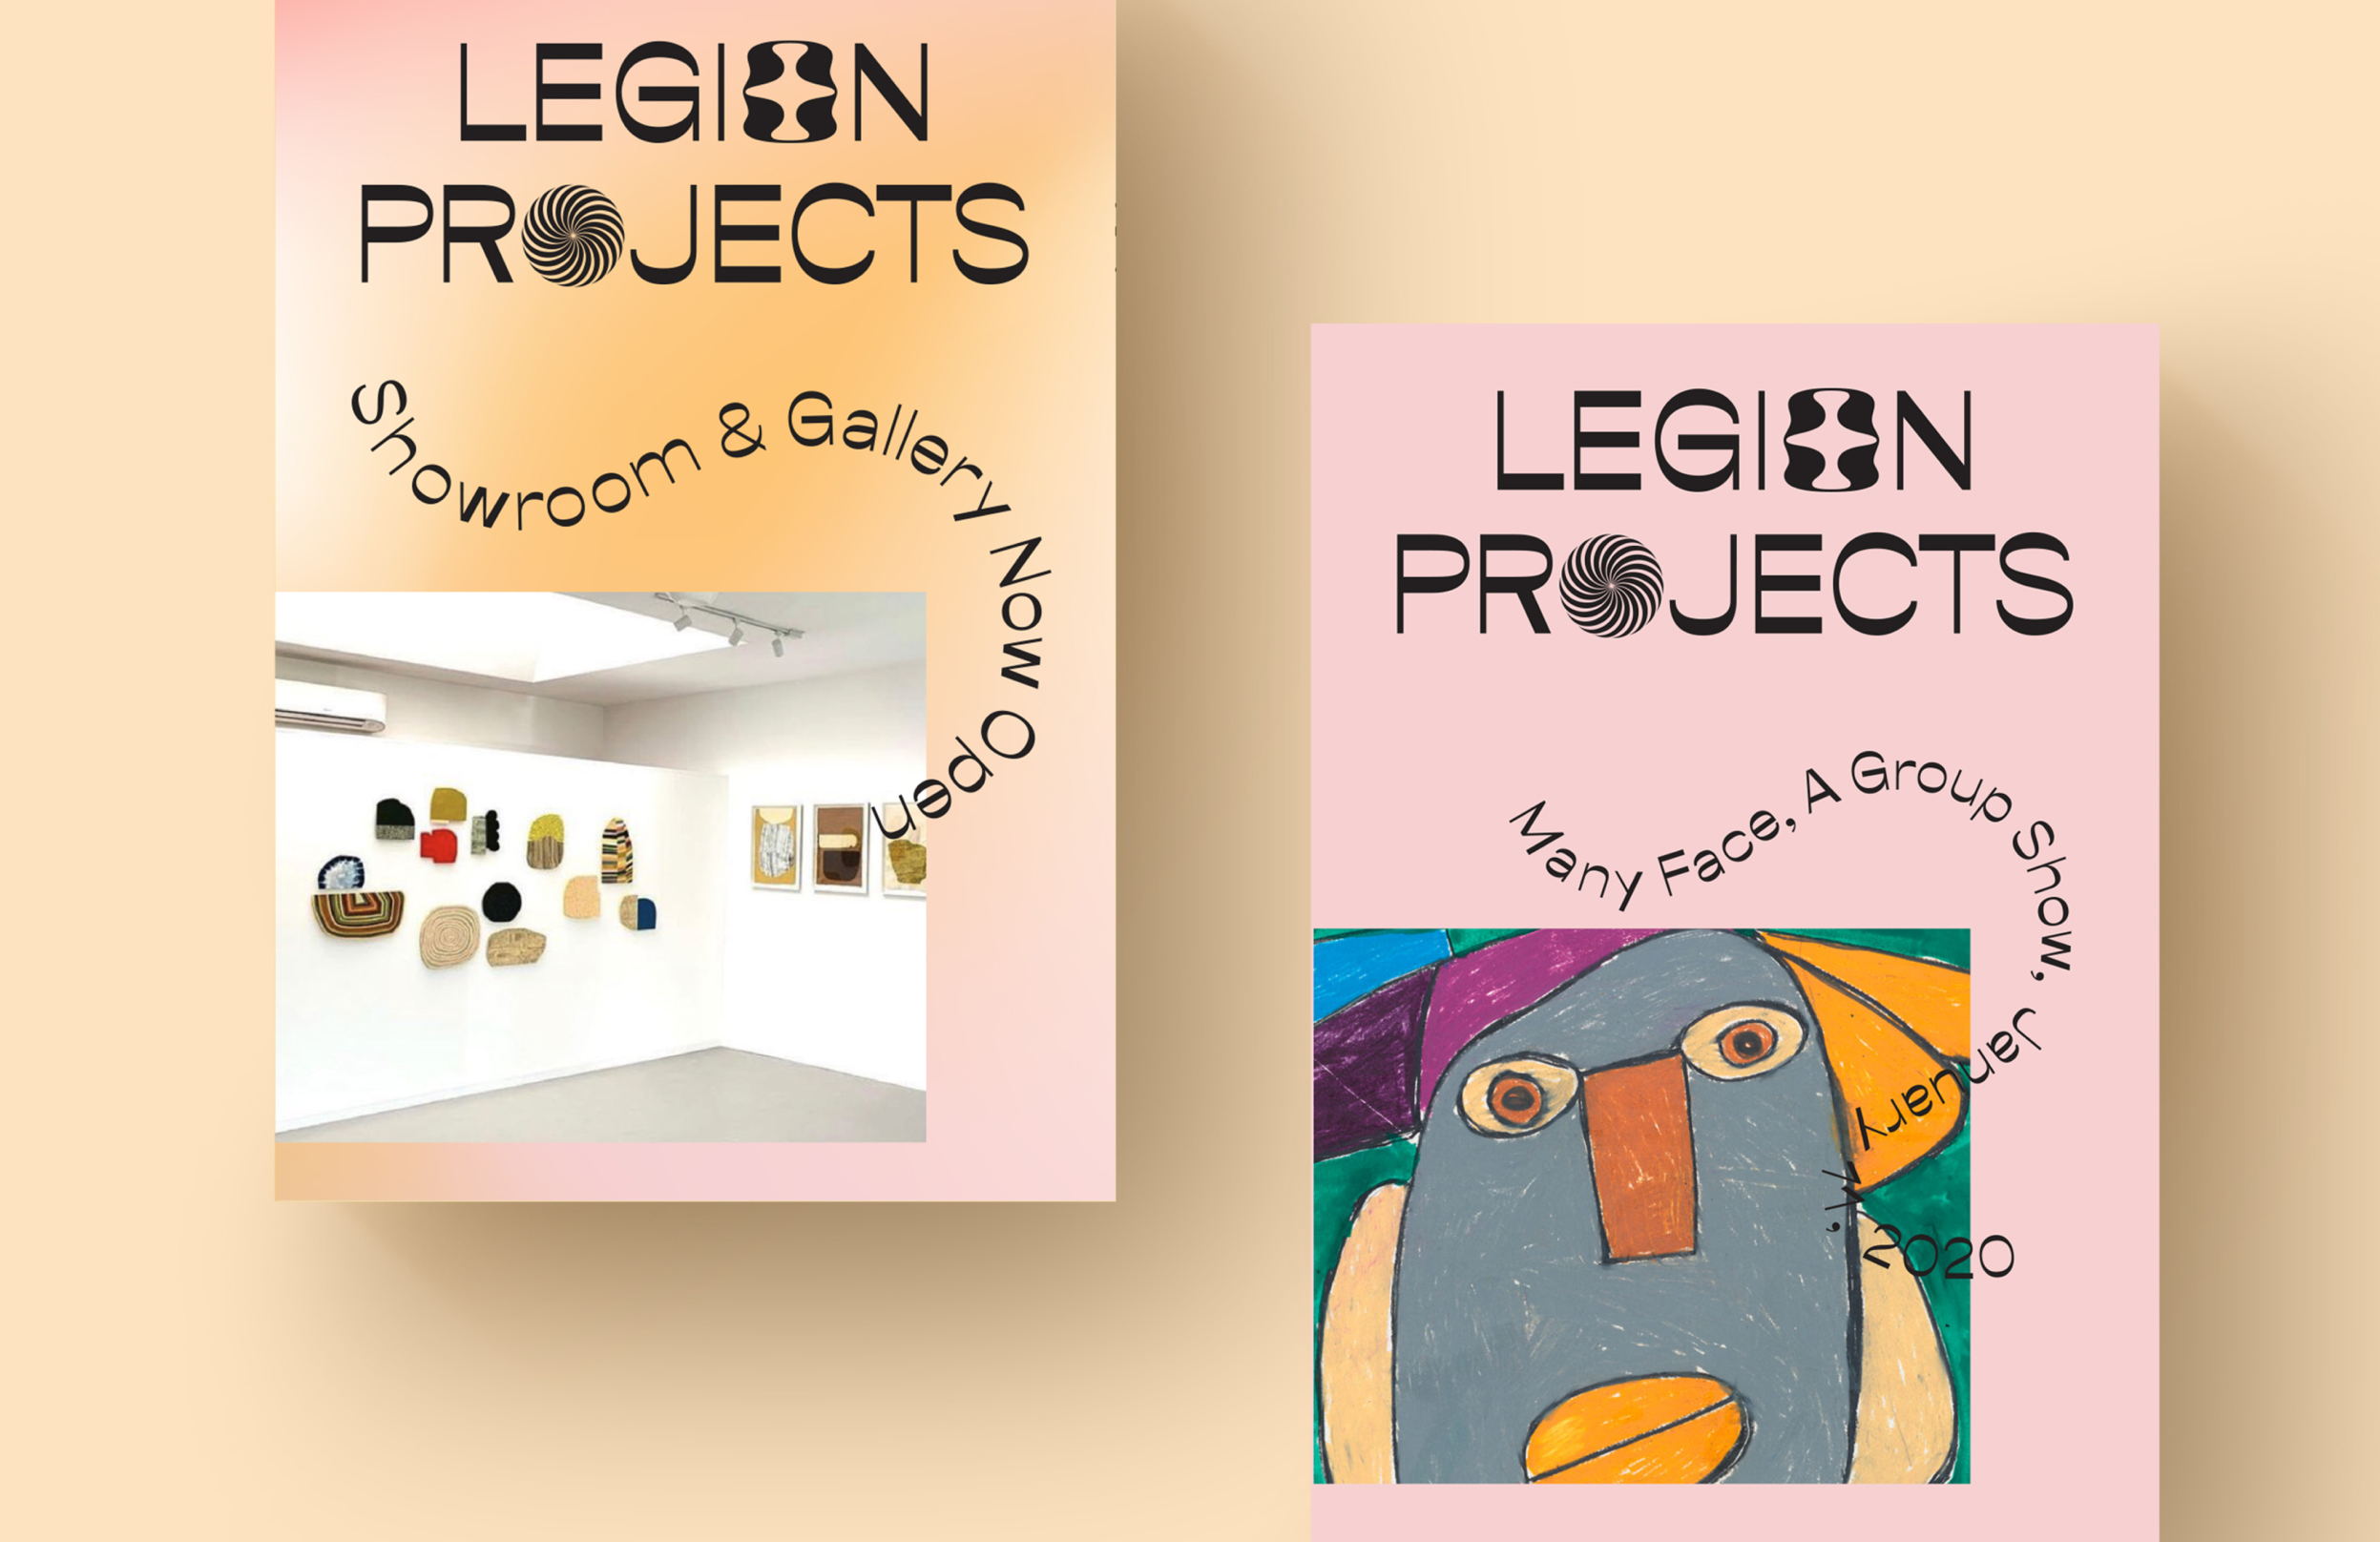 Legion-Projects-03@2x